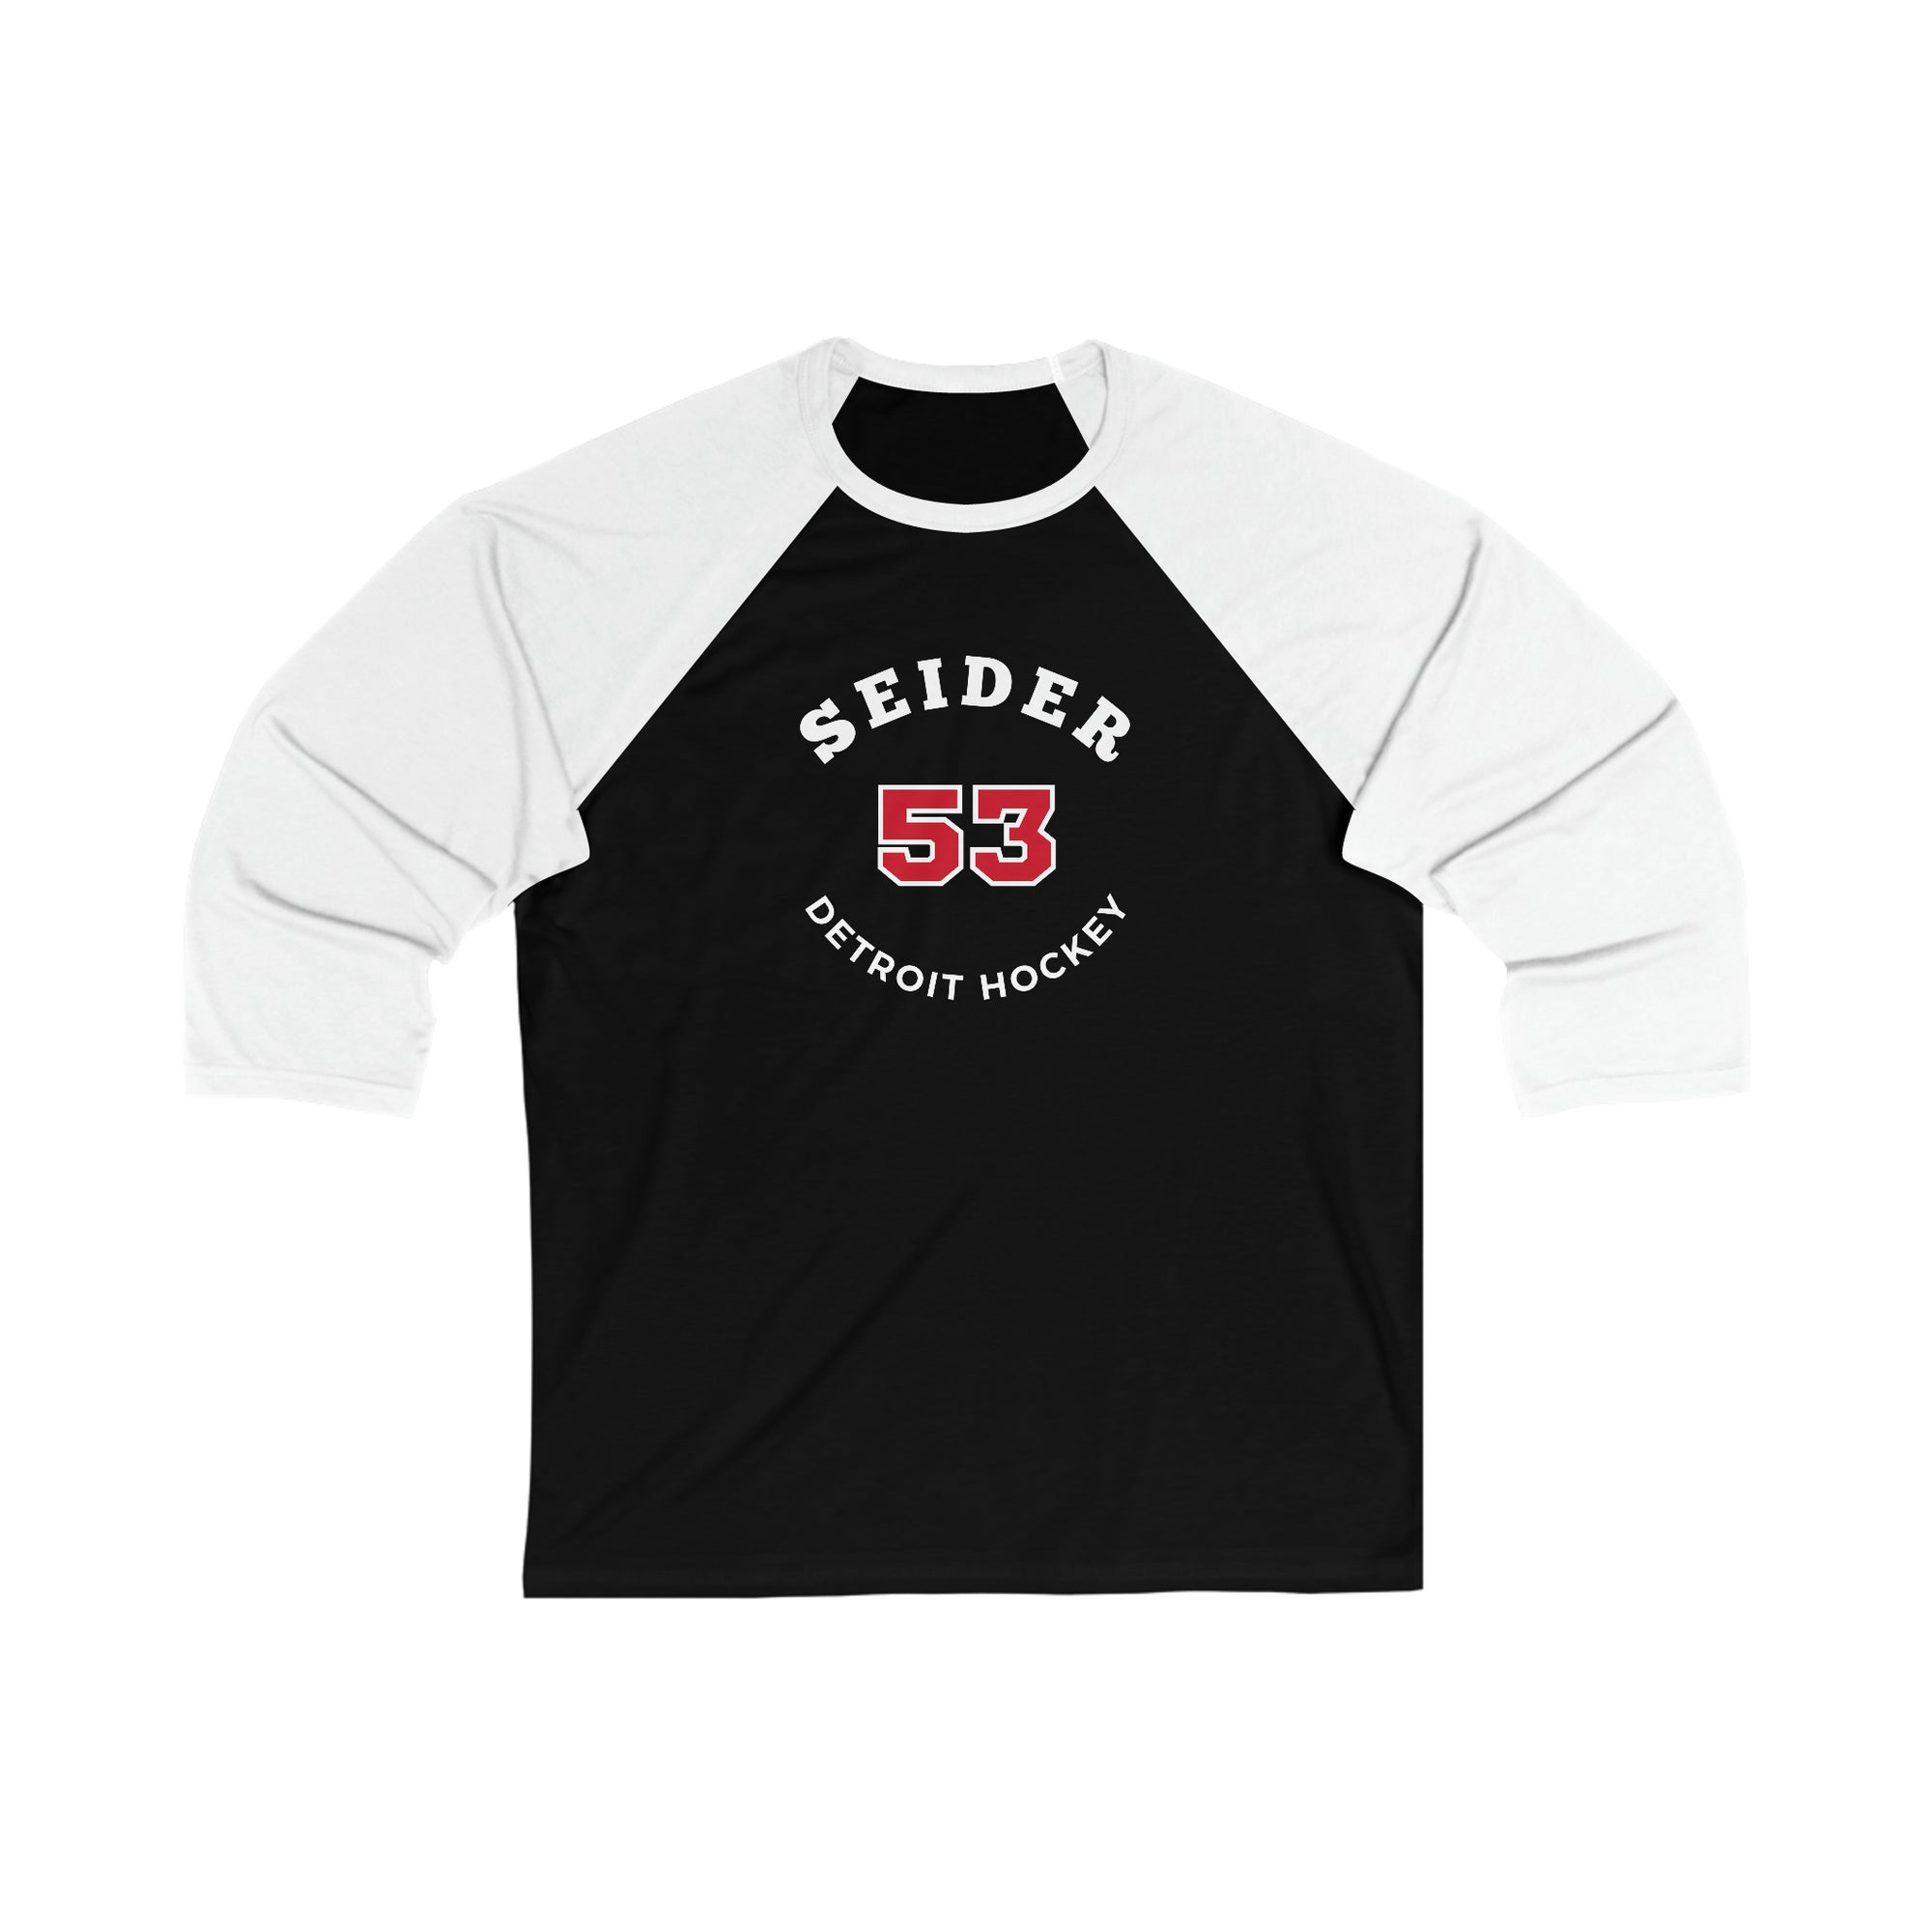 Seider 53 Detroit Hockey Number Arch Design Unisex Tri-Blend 3/4 Sleeve Raglan Baseball Shirt